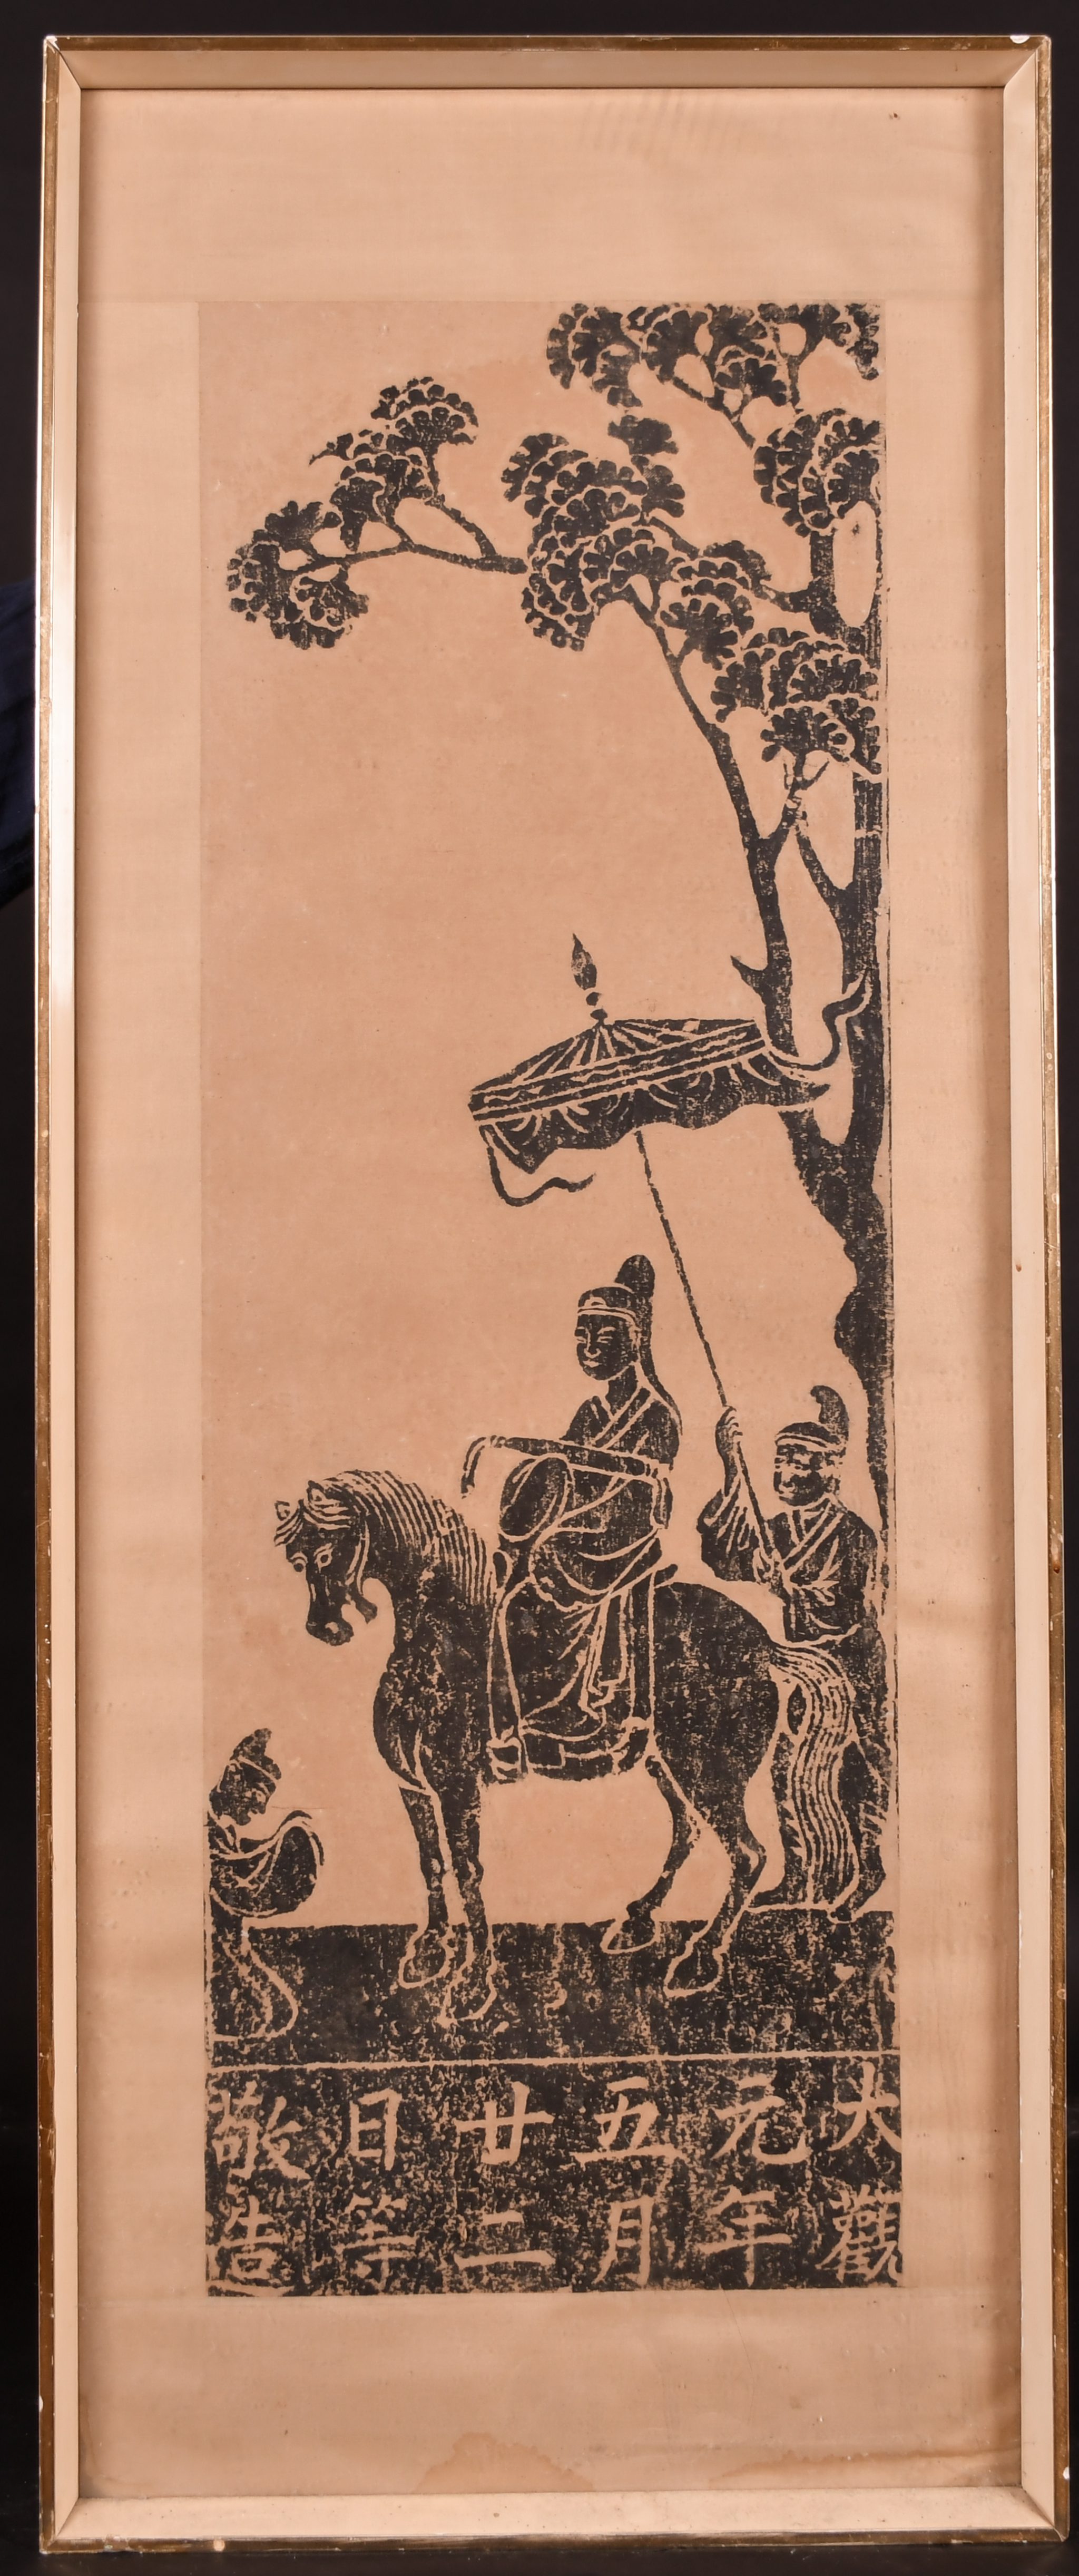 20th Century Japanese School. A Figure on Horseback, Print, 28.5” x 10” (72.3 x 25.4cm) - Image 2 of 3